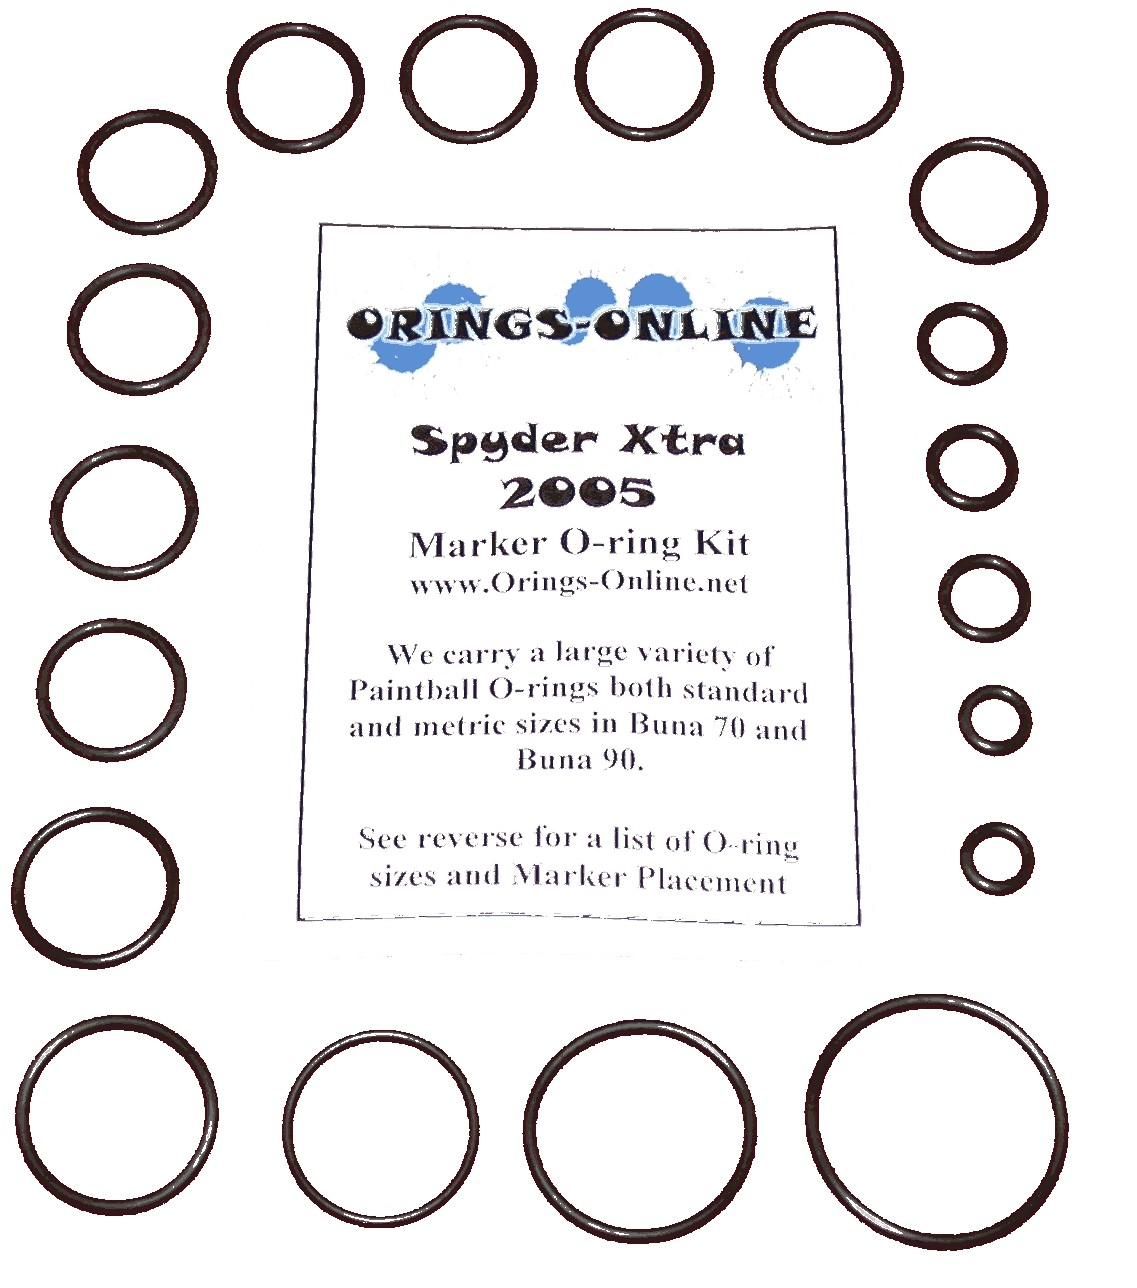 Spyder Xtra 2005 Marker O-ring Kit